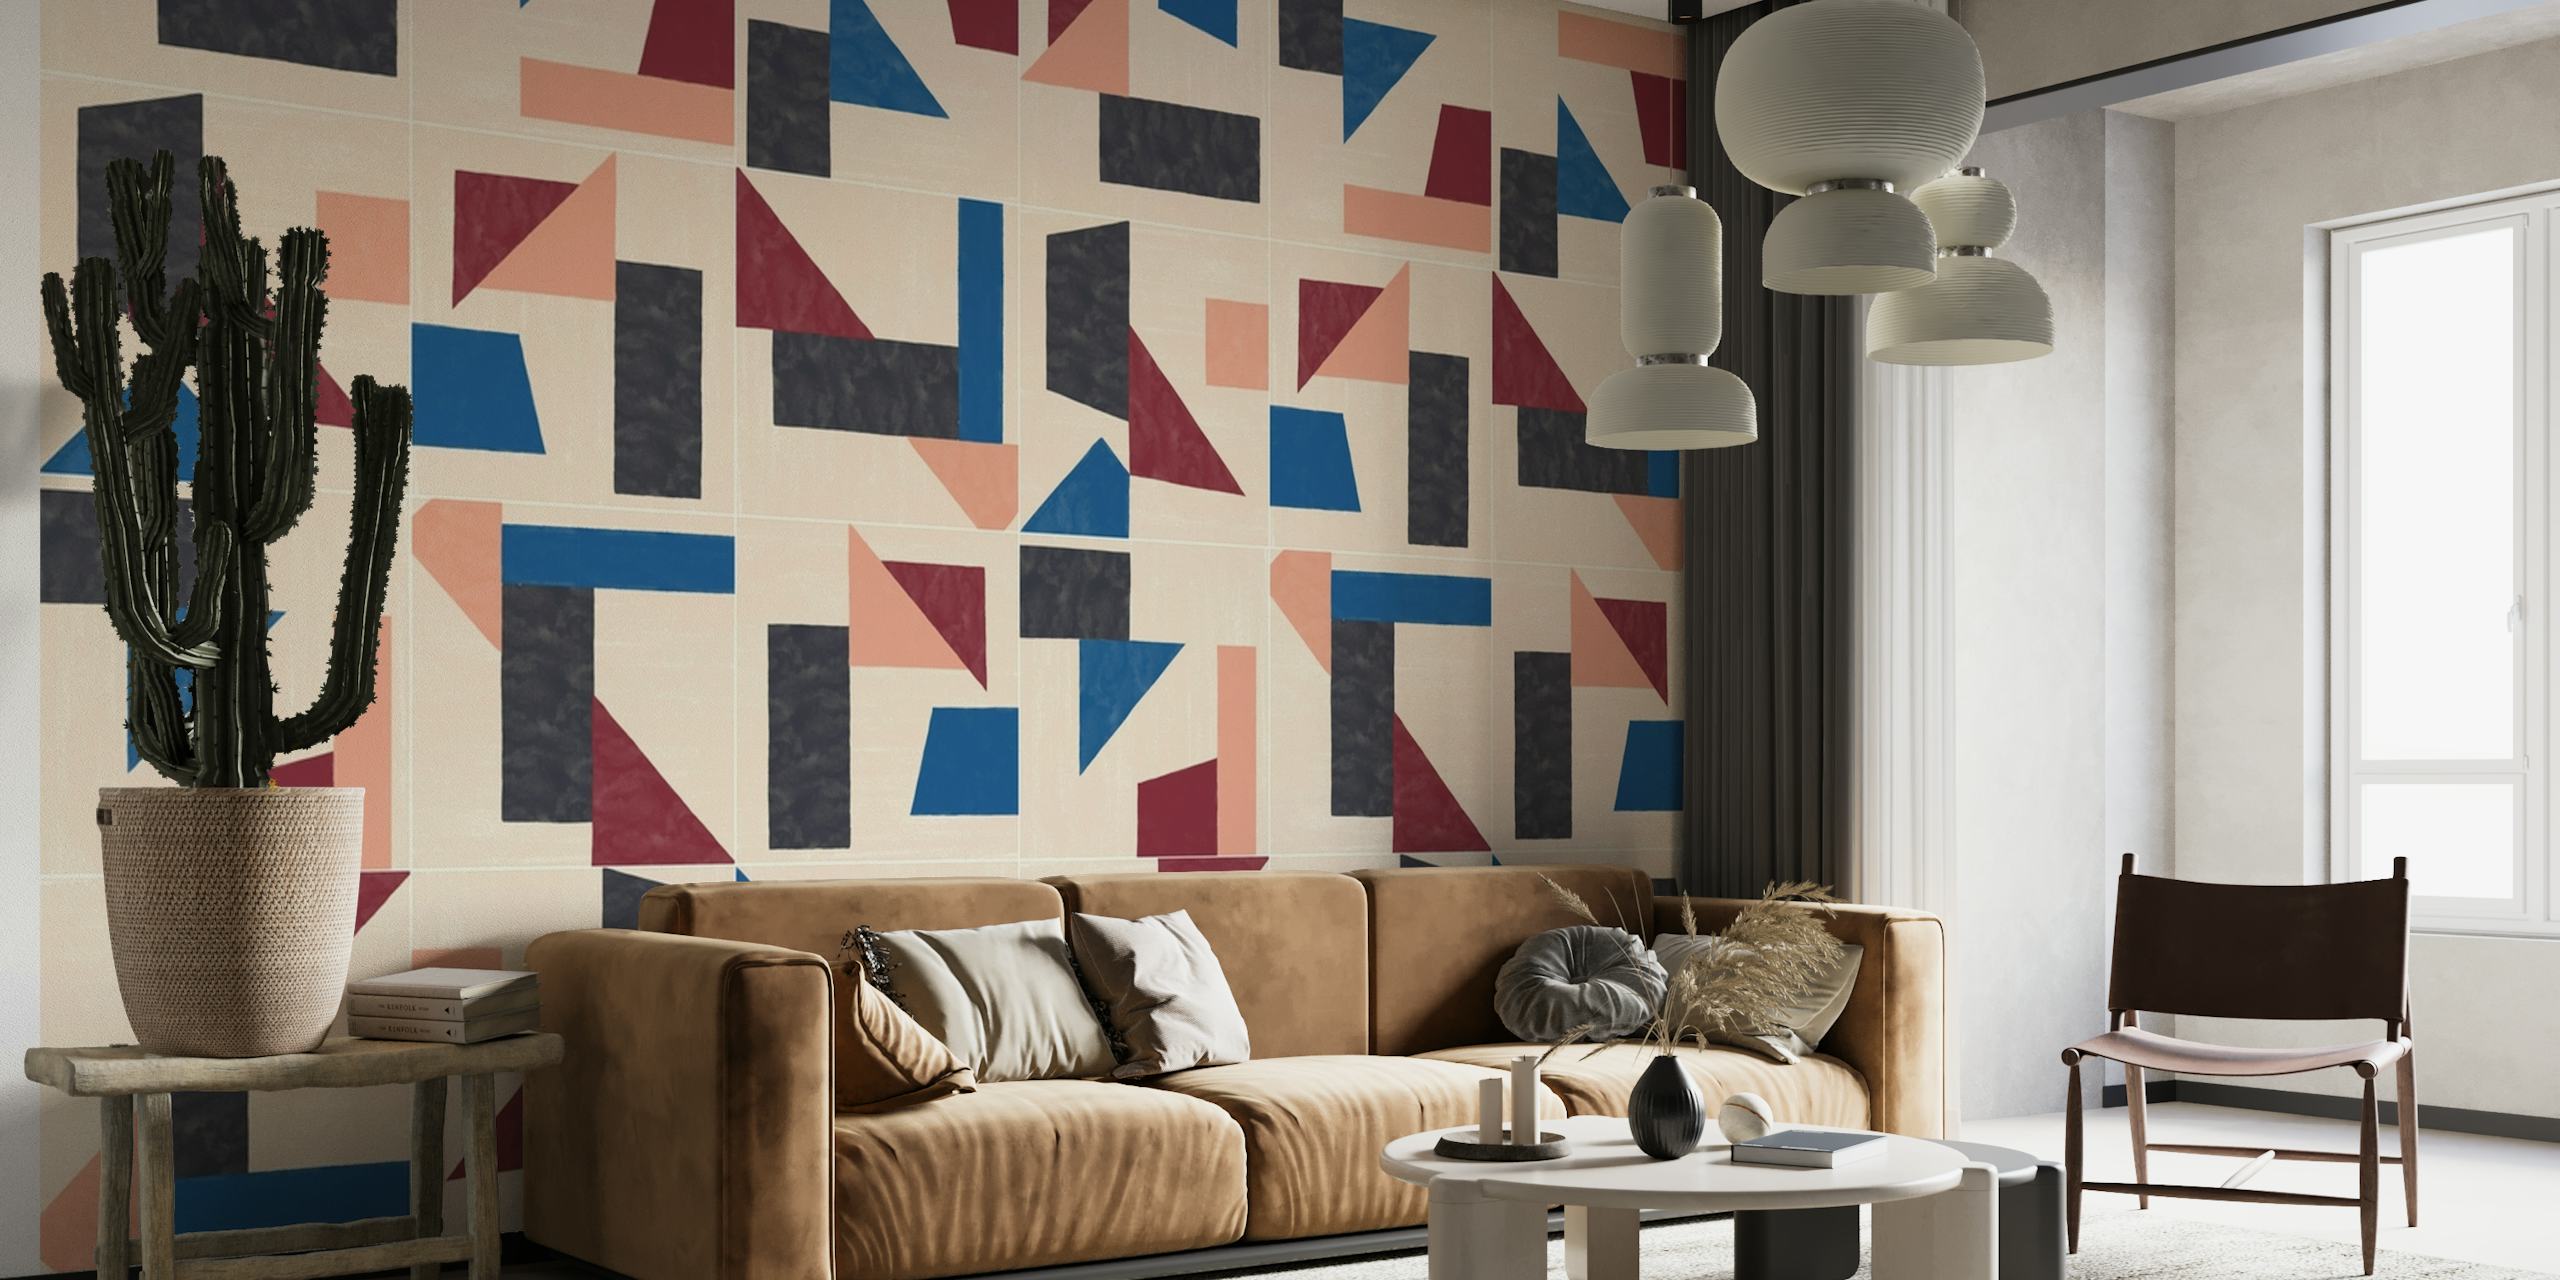 Tangram Wall Tiles Three wallpaper